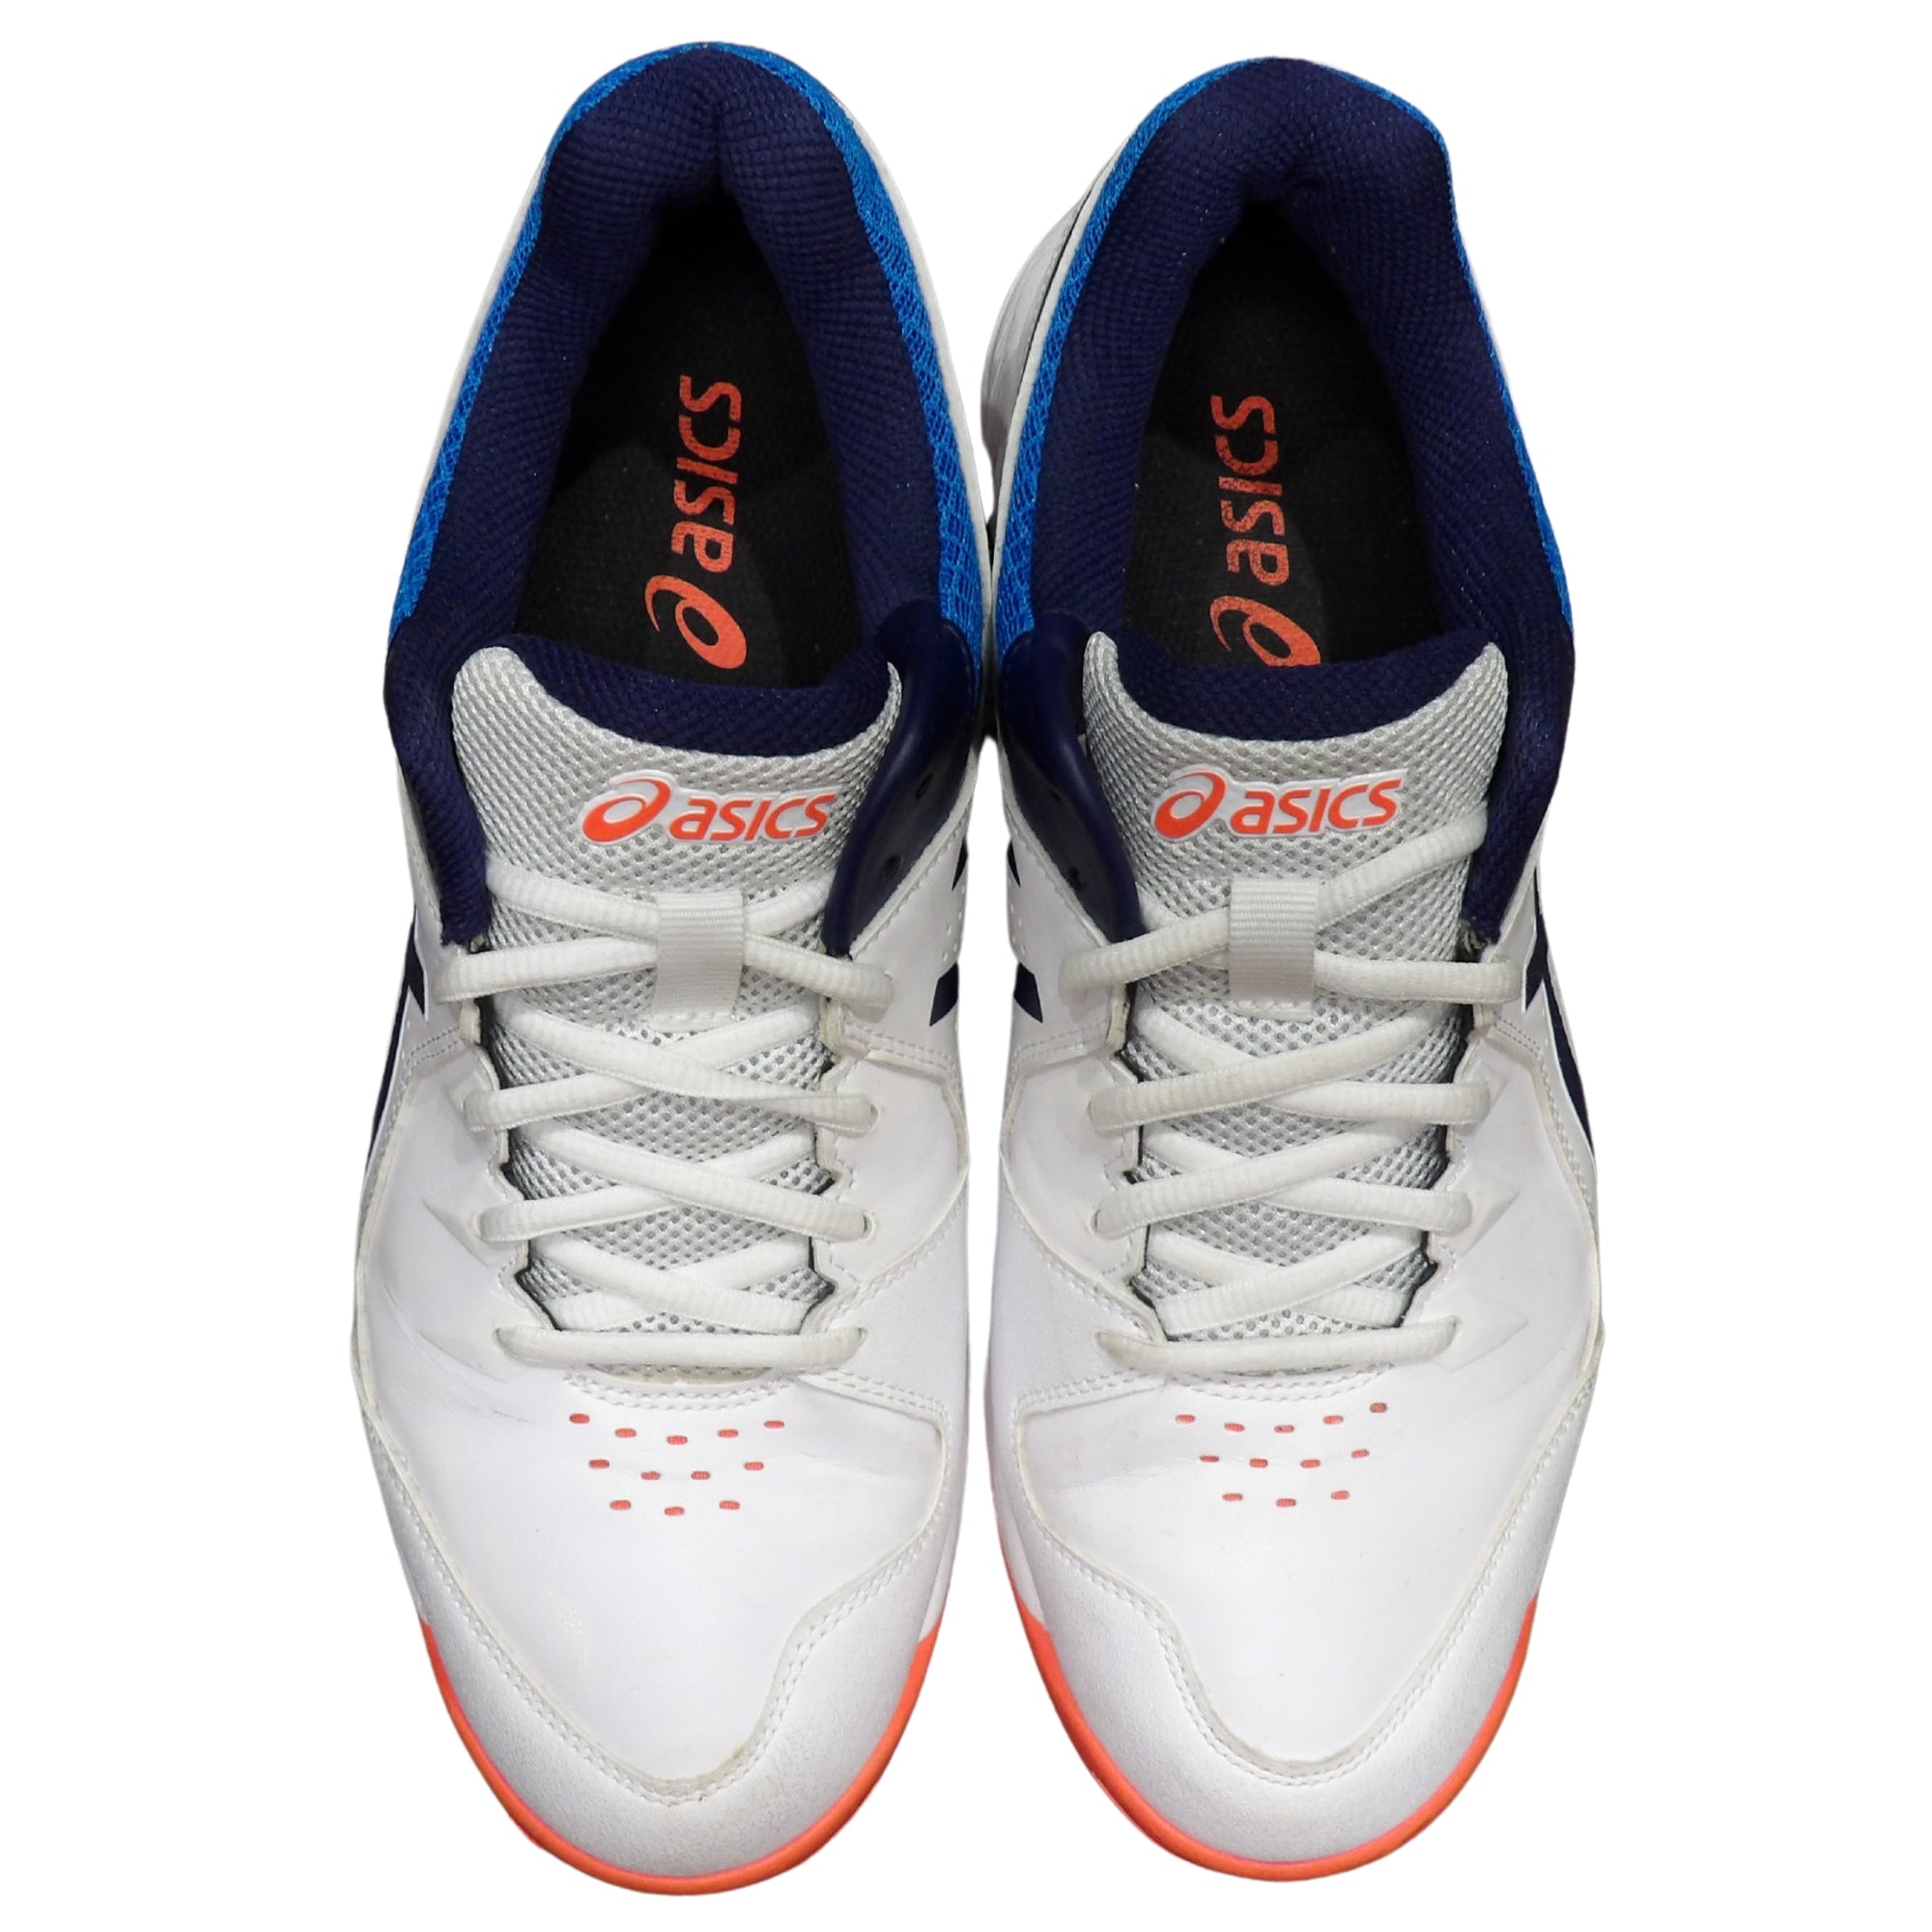 Asics Cricket Shoes, Model Gel-Peake - White/Blue/Orange